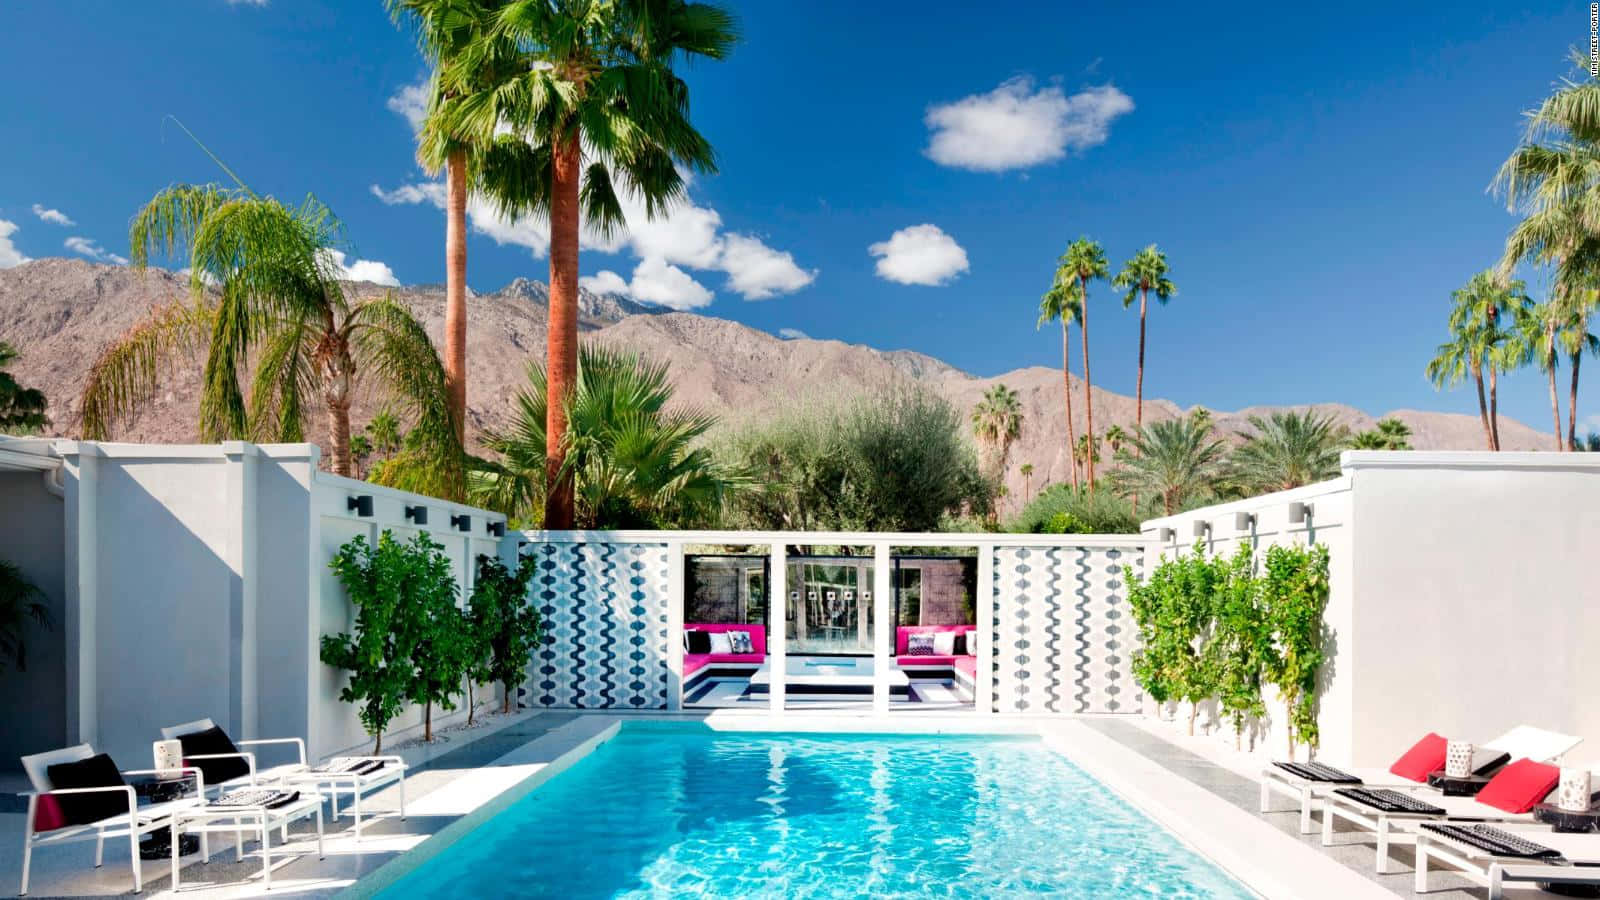 Century Palm Springs Pool Background